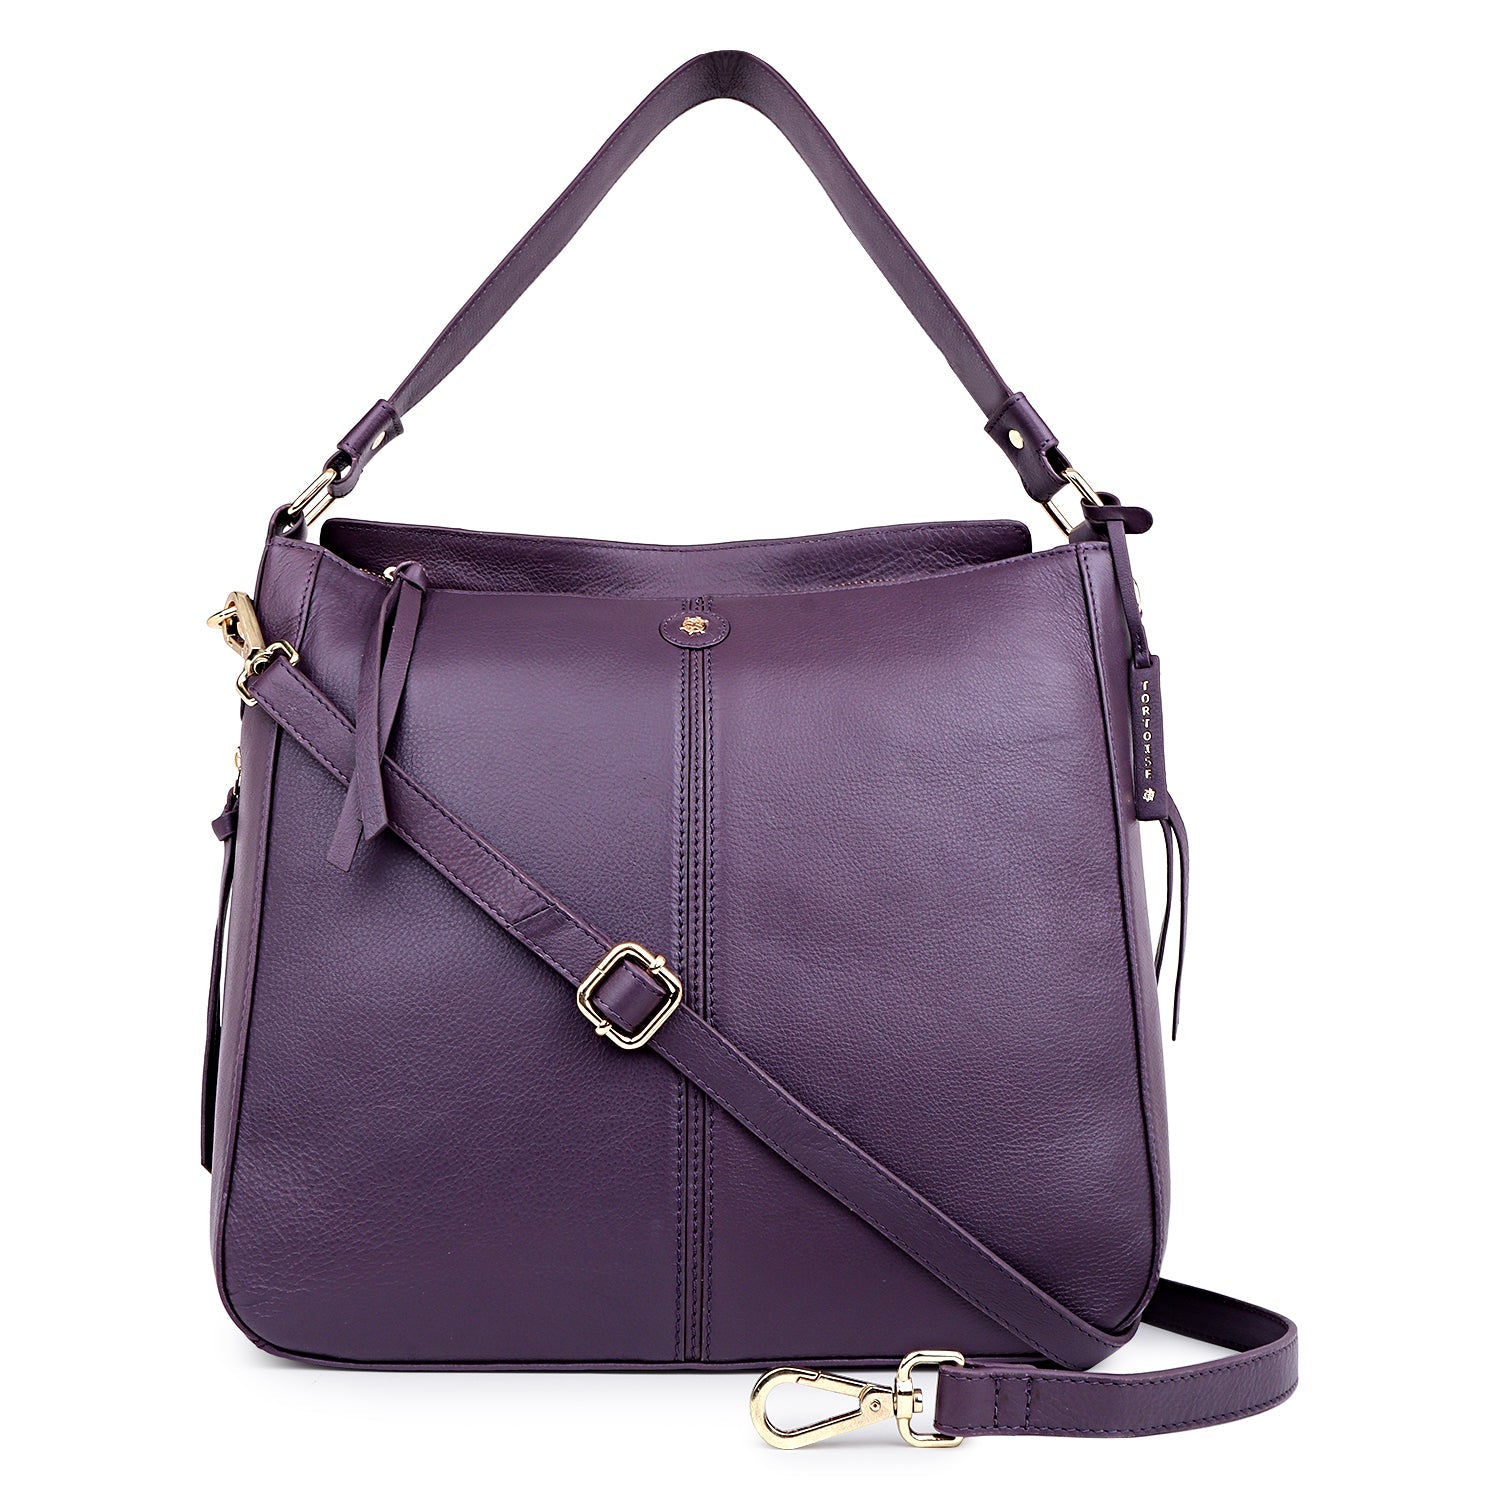 Ivanna - The Handbag/Sling Bag - Purple - Tortoise  